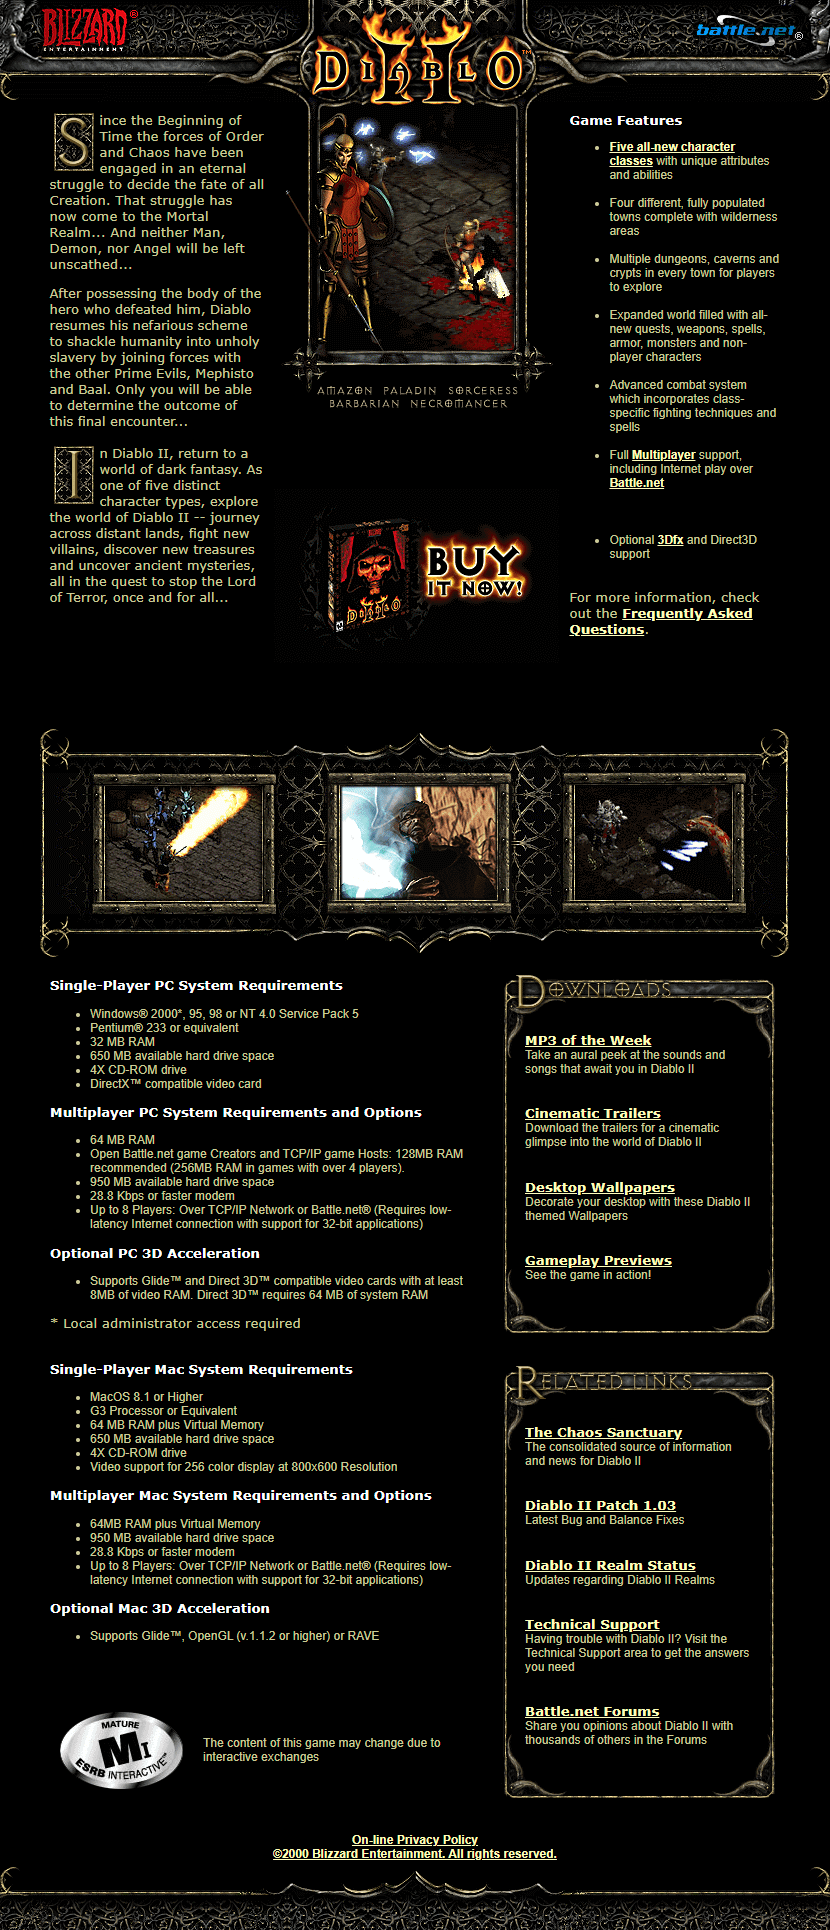 Diablo II website in 2000